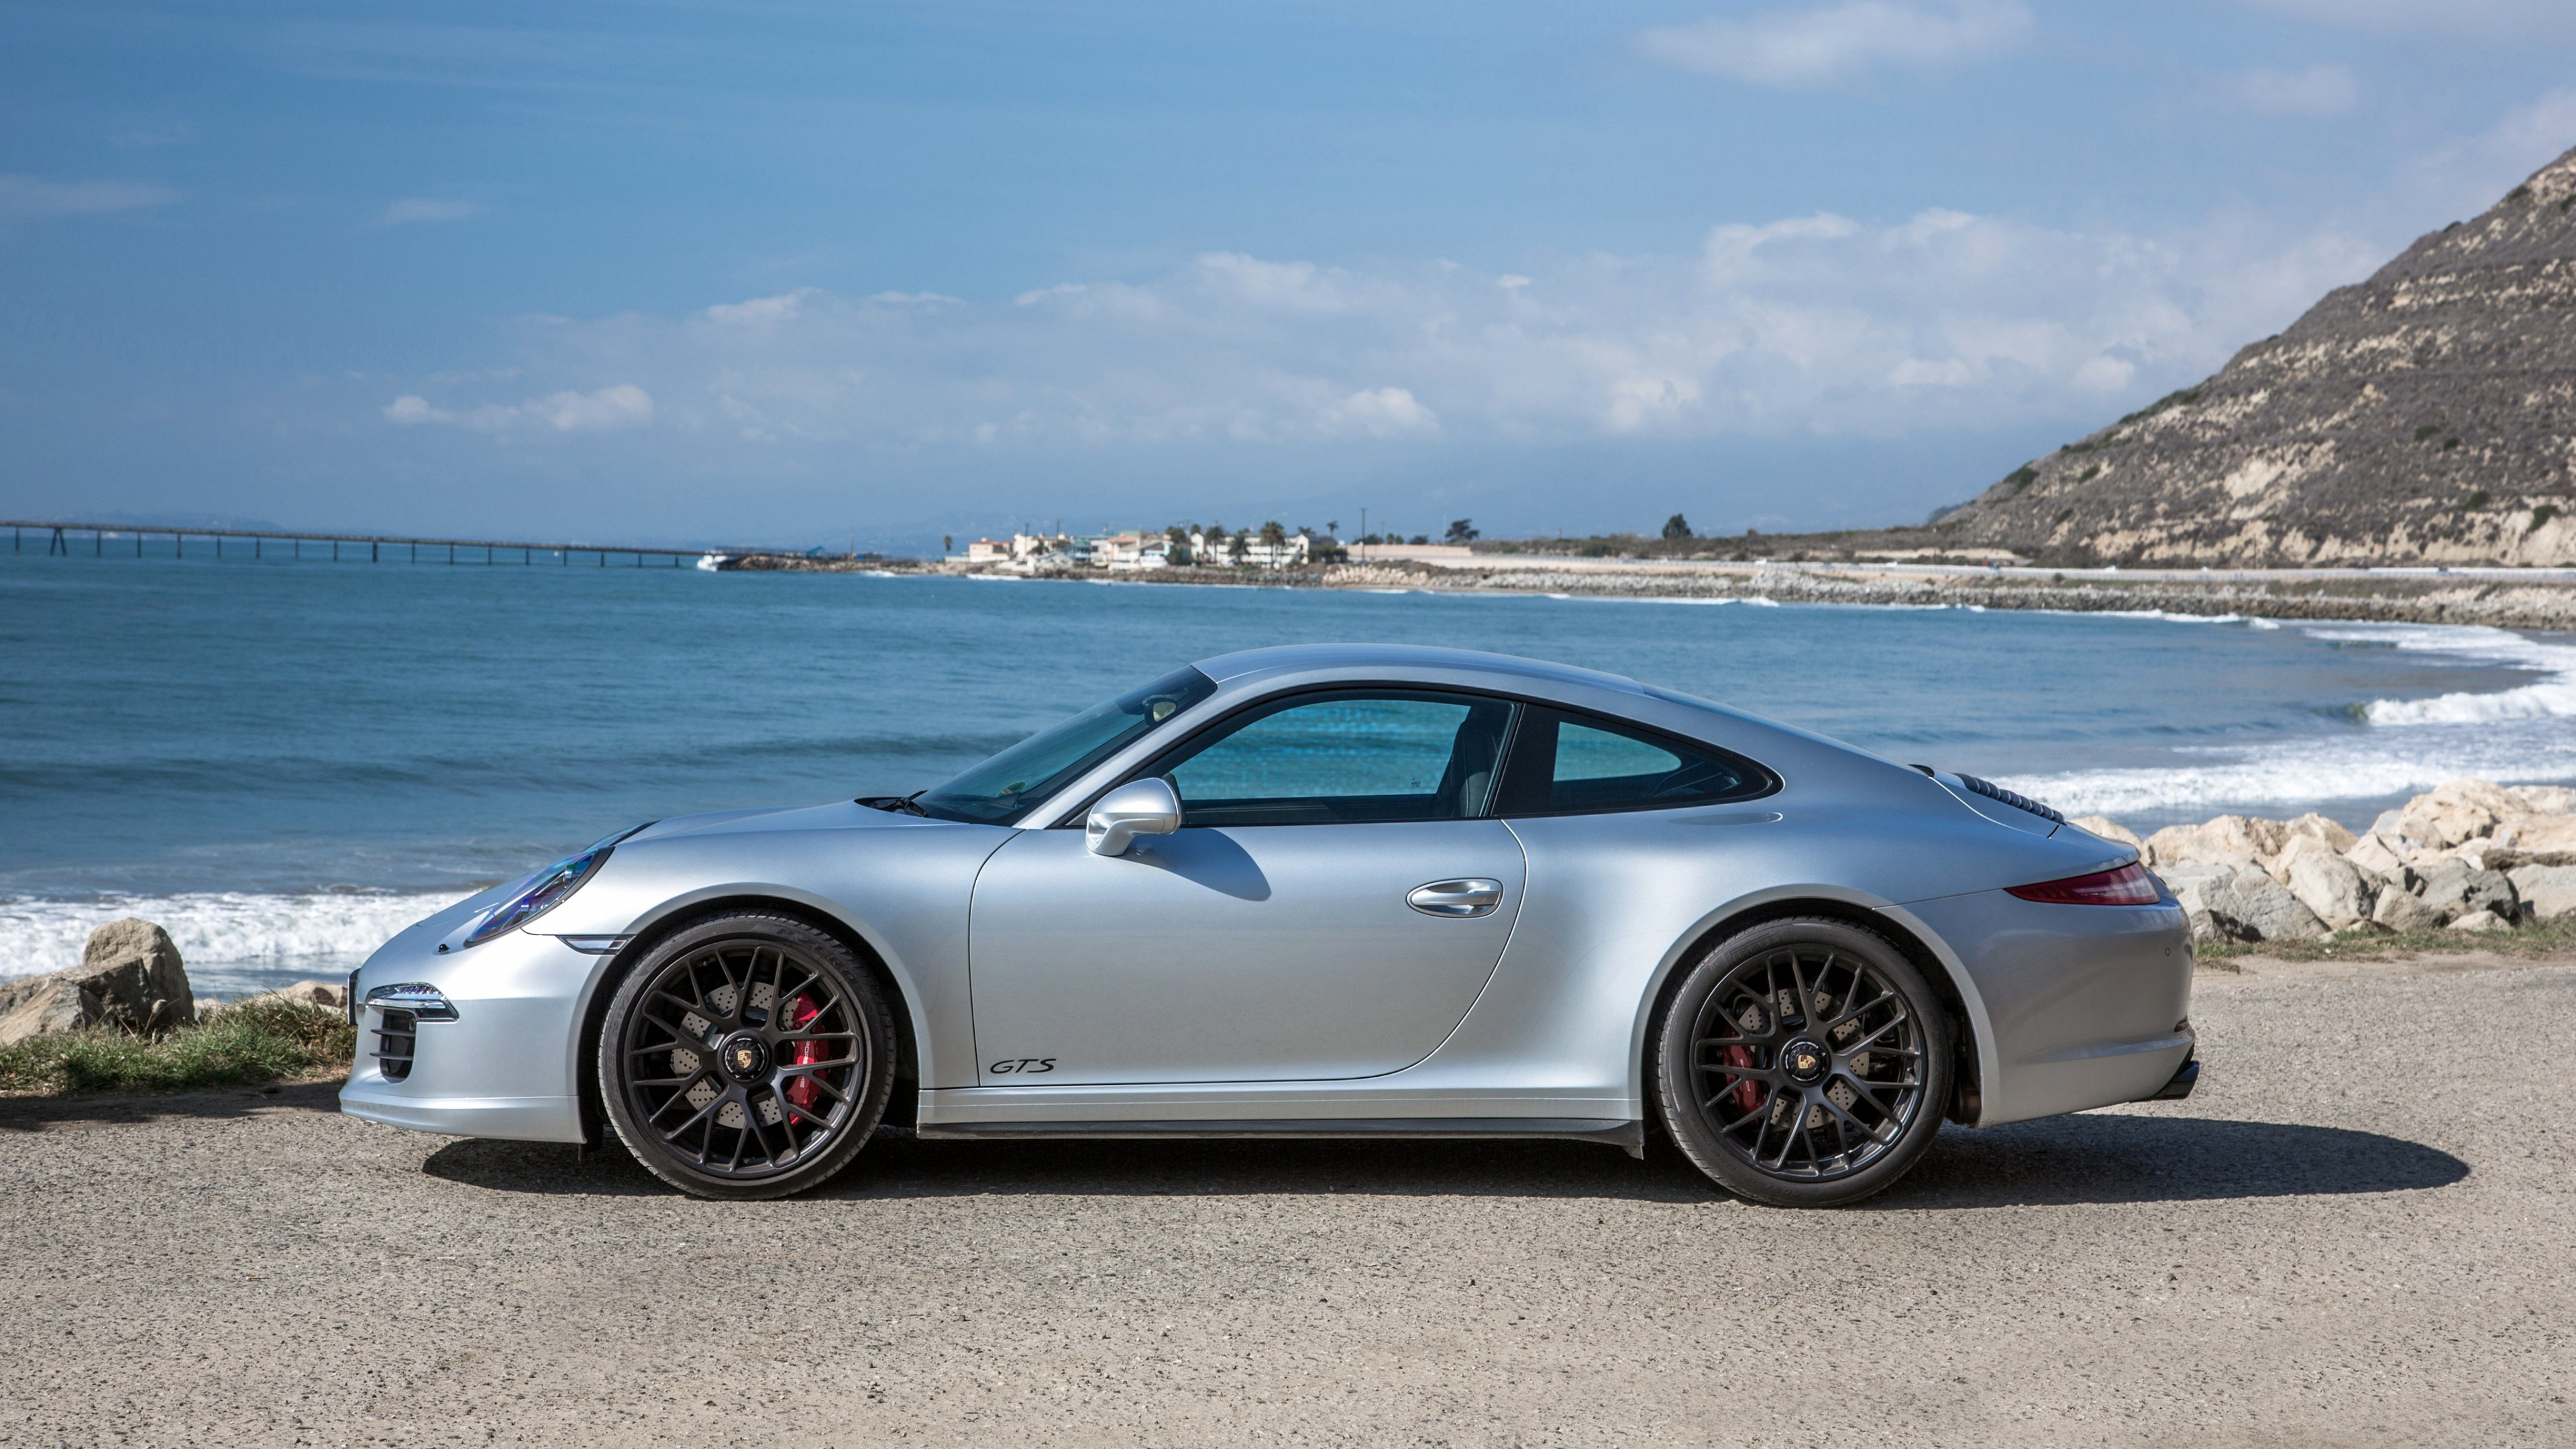 Silver Porsche 911 Parked on Seashore During Daytime. Wallpaper in 3840x2160 Resolution